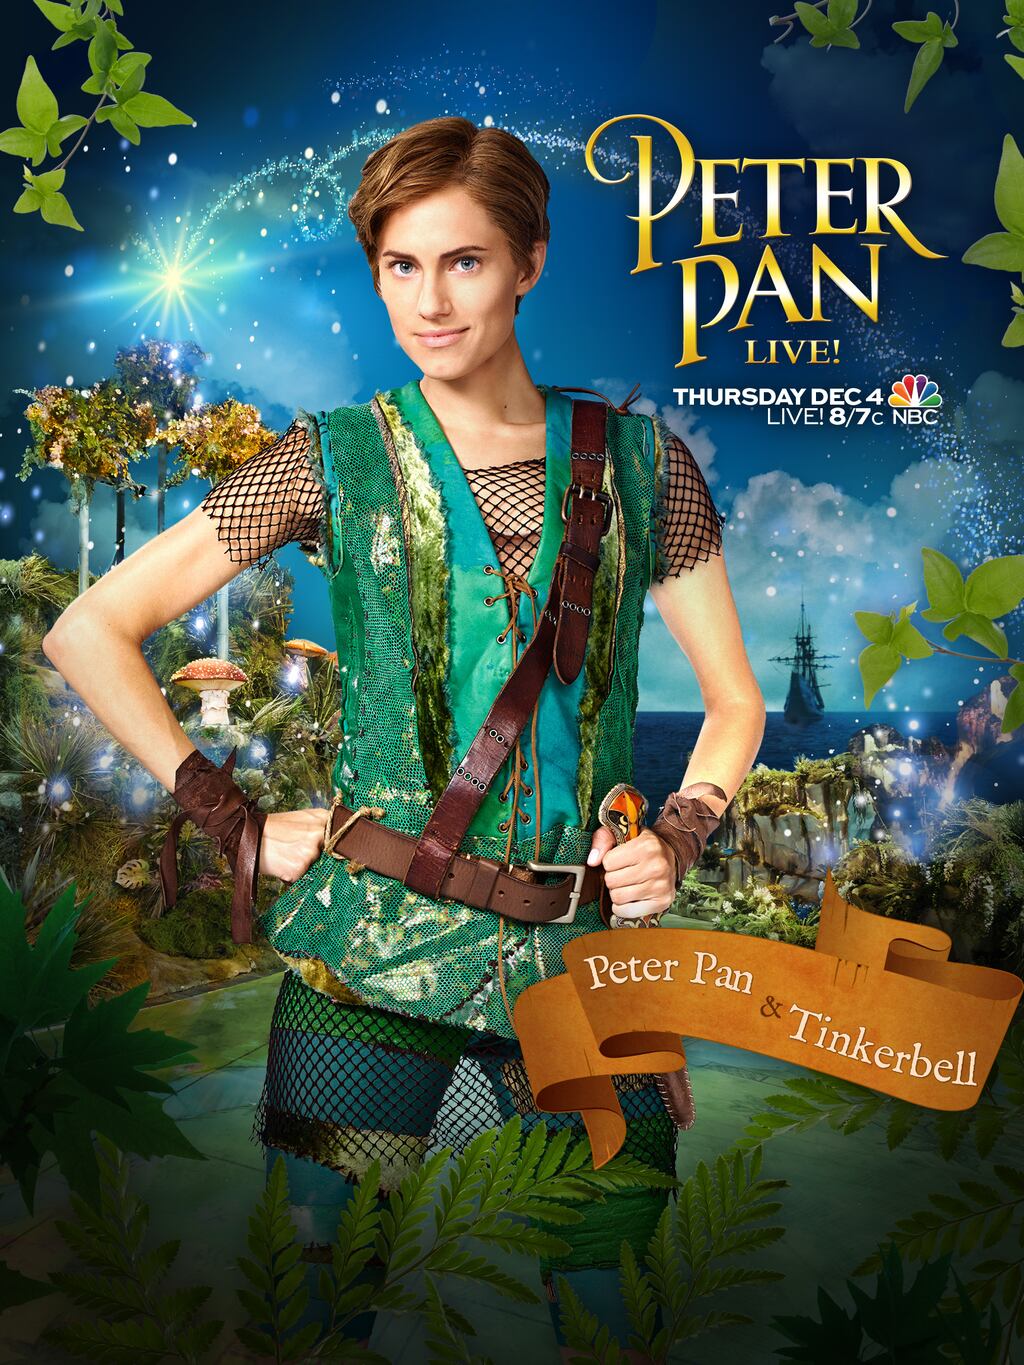 Peter Pan LIVE! Download Peter Pan Live! Posters Photo 2084306